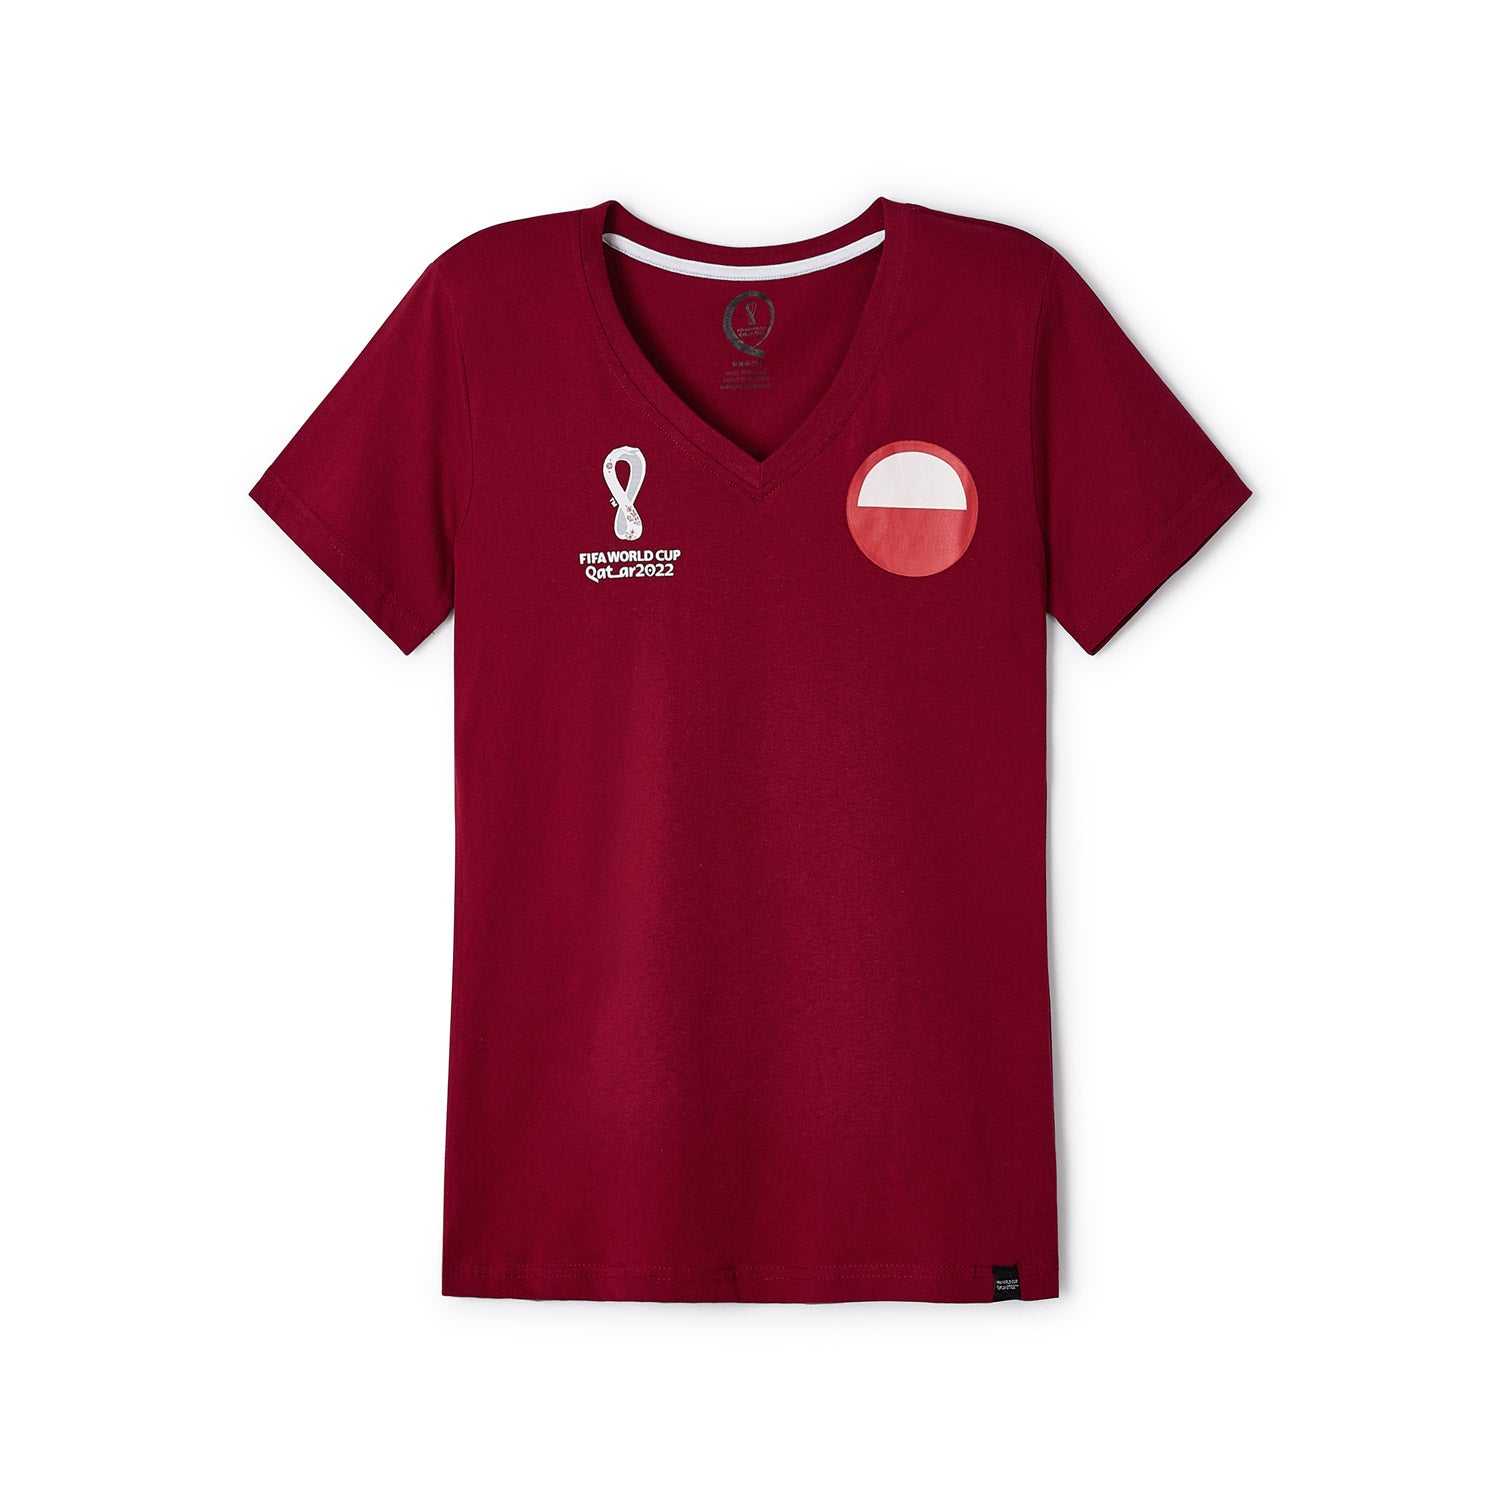 2022 World Cup Poland Red T-Shirt - Women's